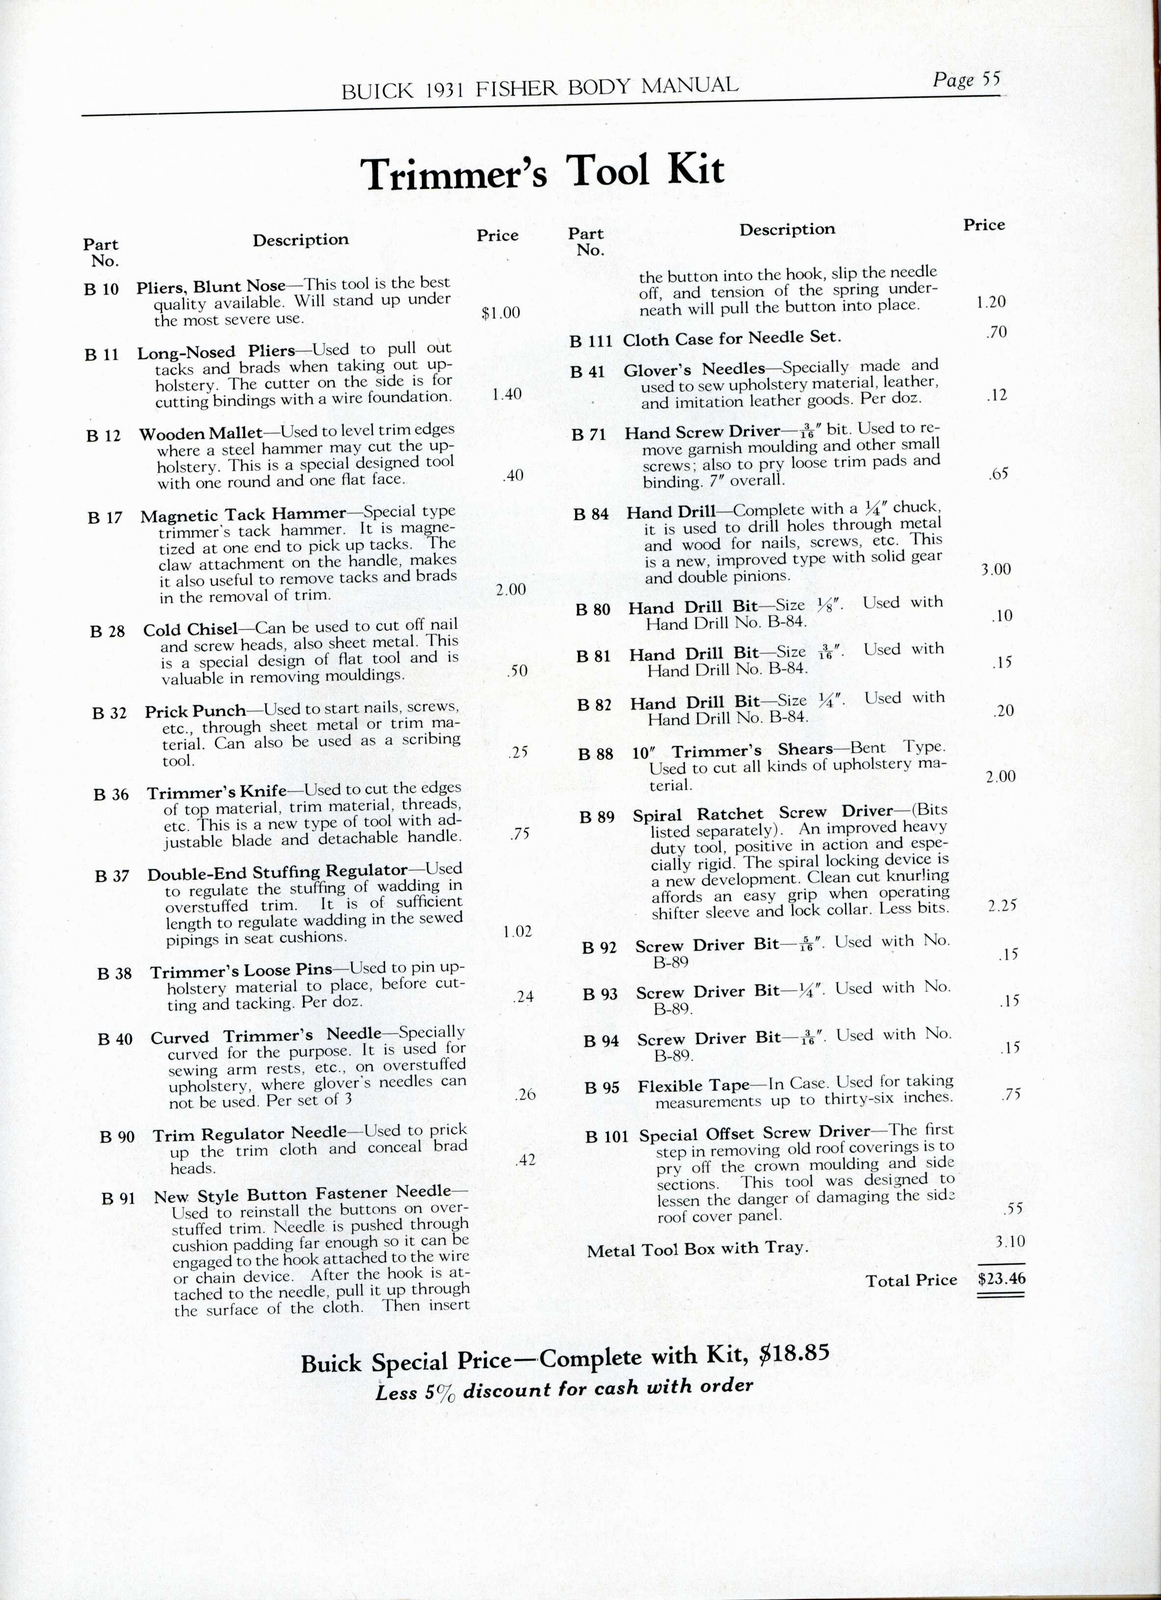 n_1931 Buick Fisher Body Manual-55.jpg